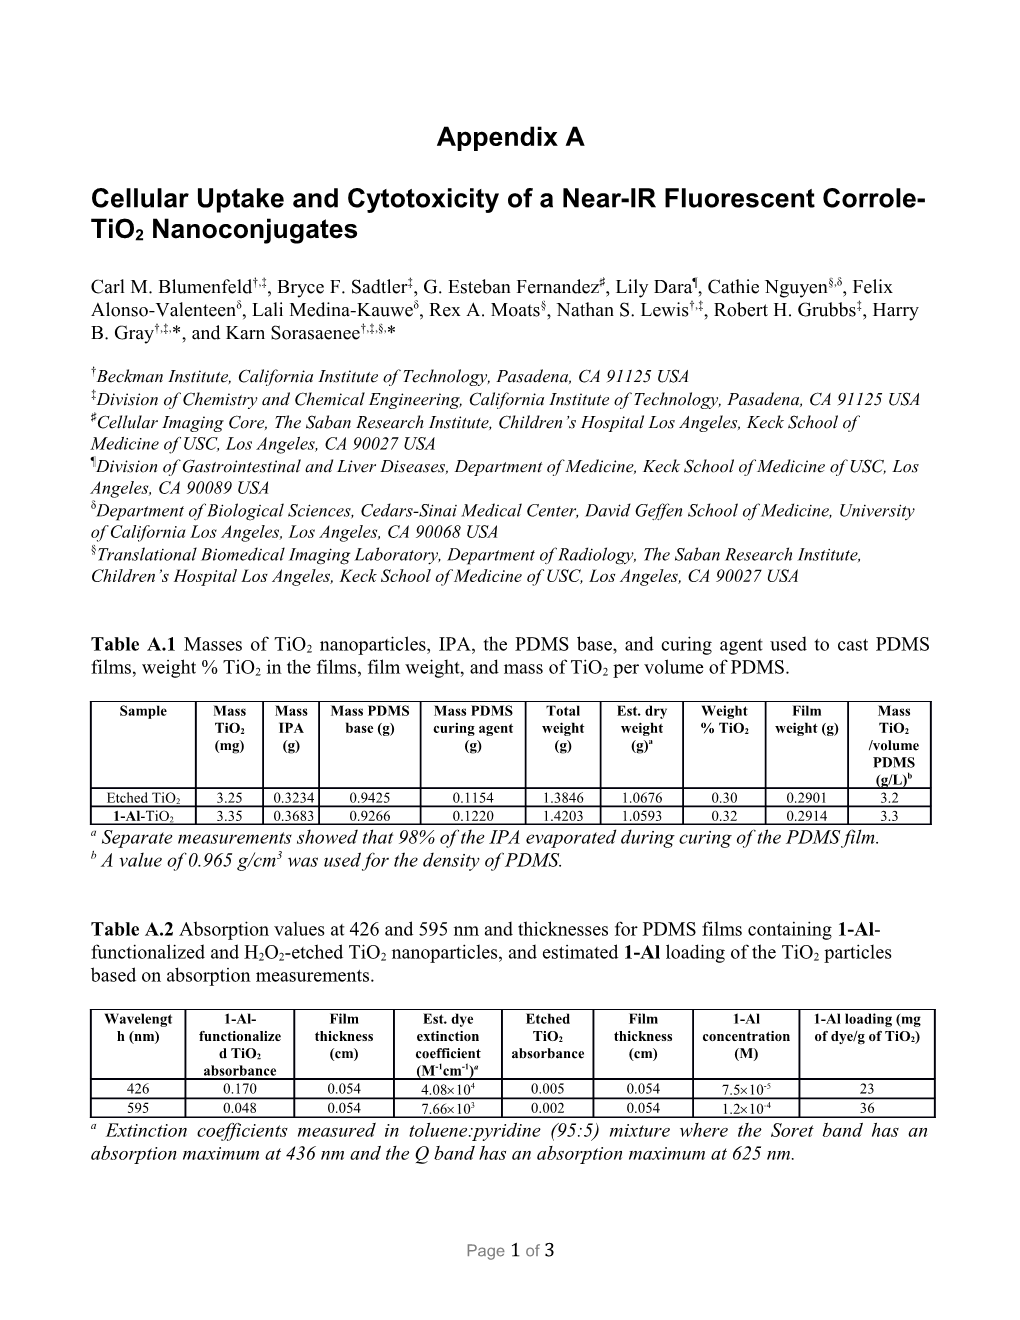 Cellular Uptake and Cytotoxicity of a Near-IR Fluorescent Corrole-Tio2 Nanoconjugates